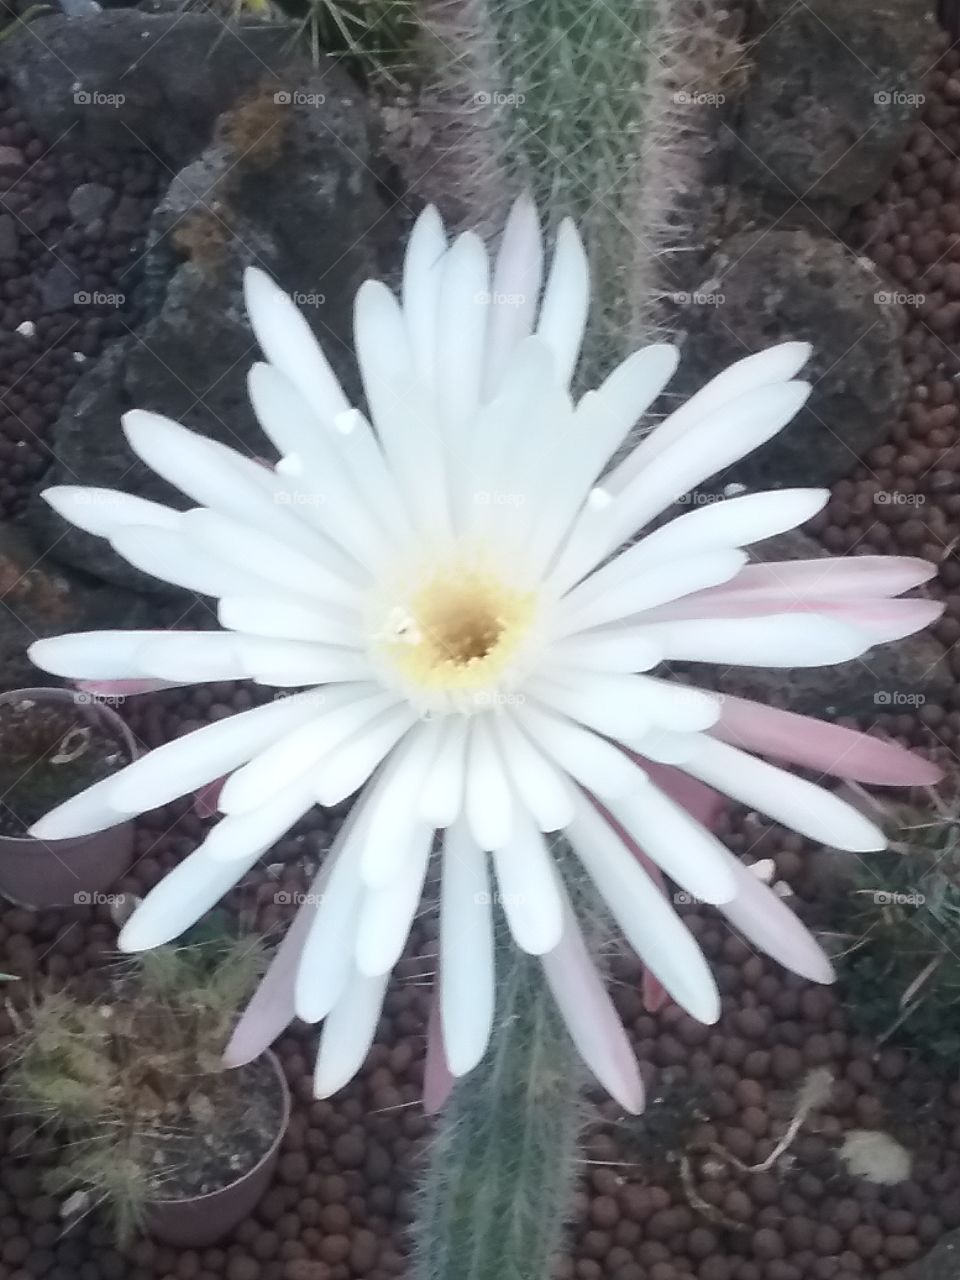 beautiful cactus flower this morning